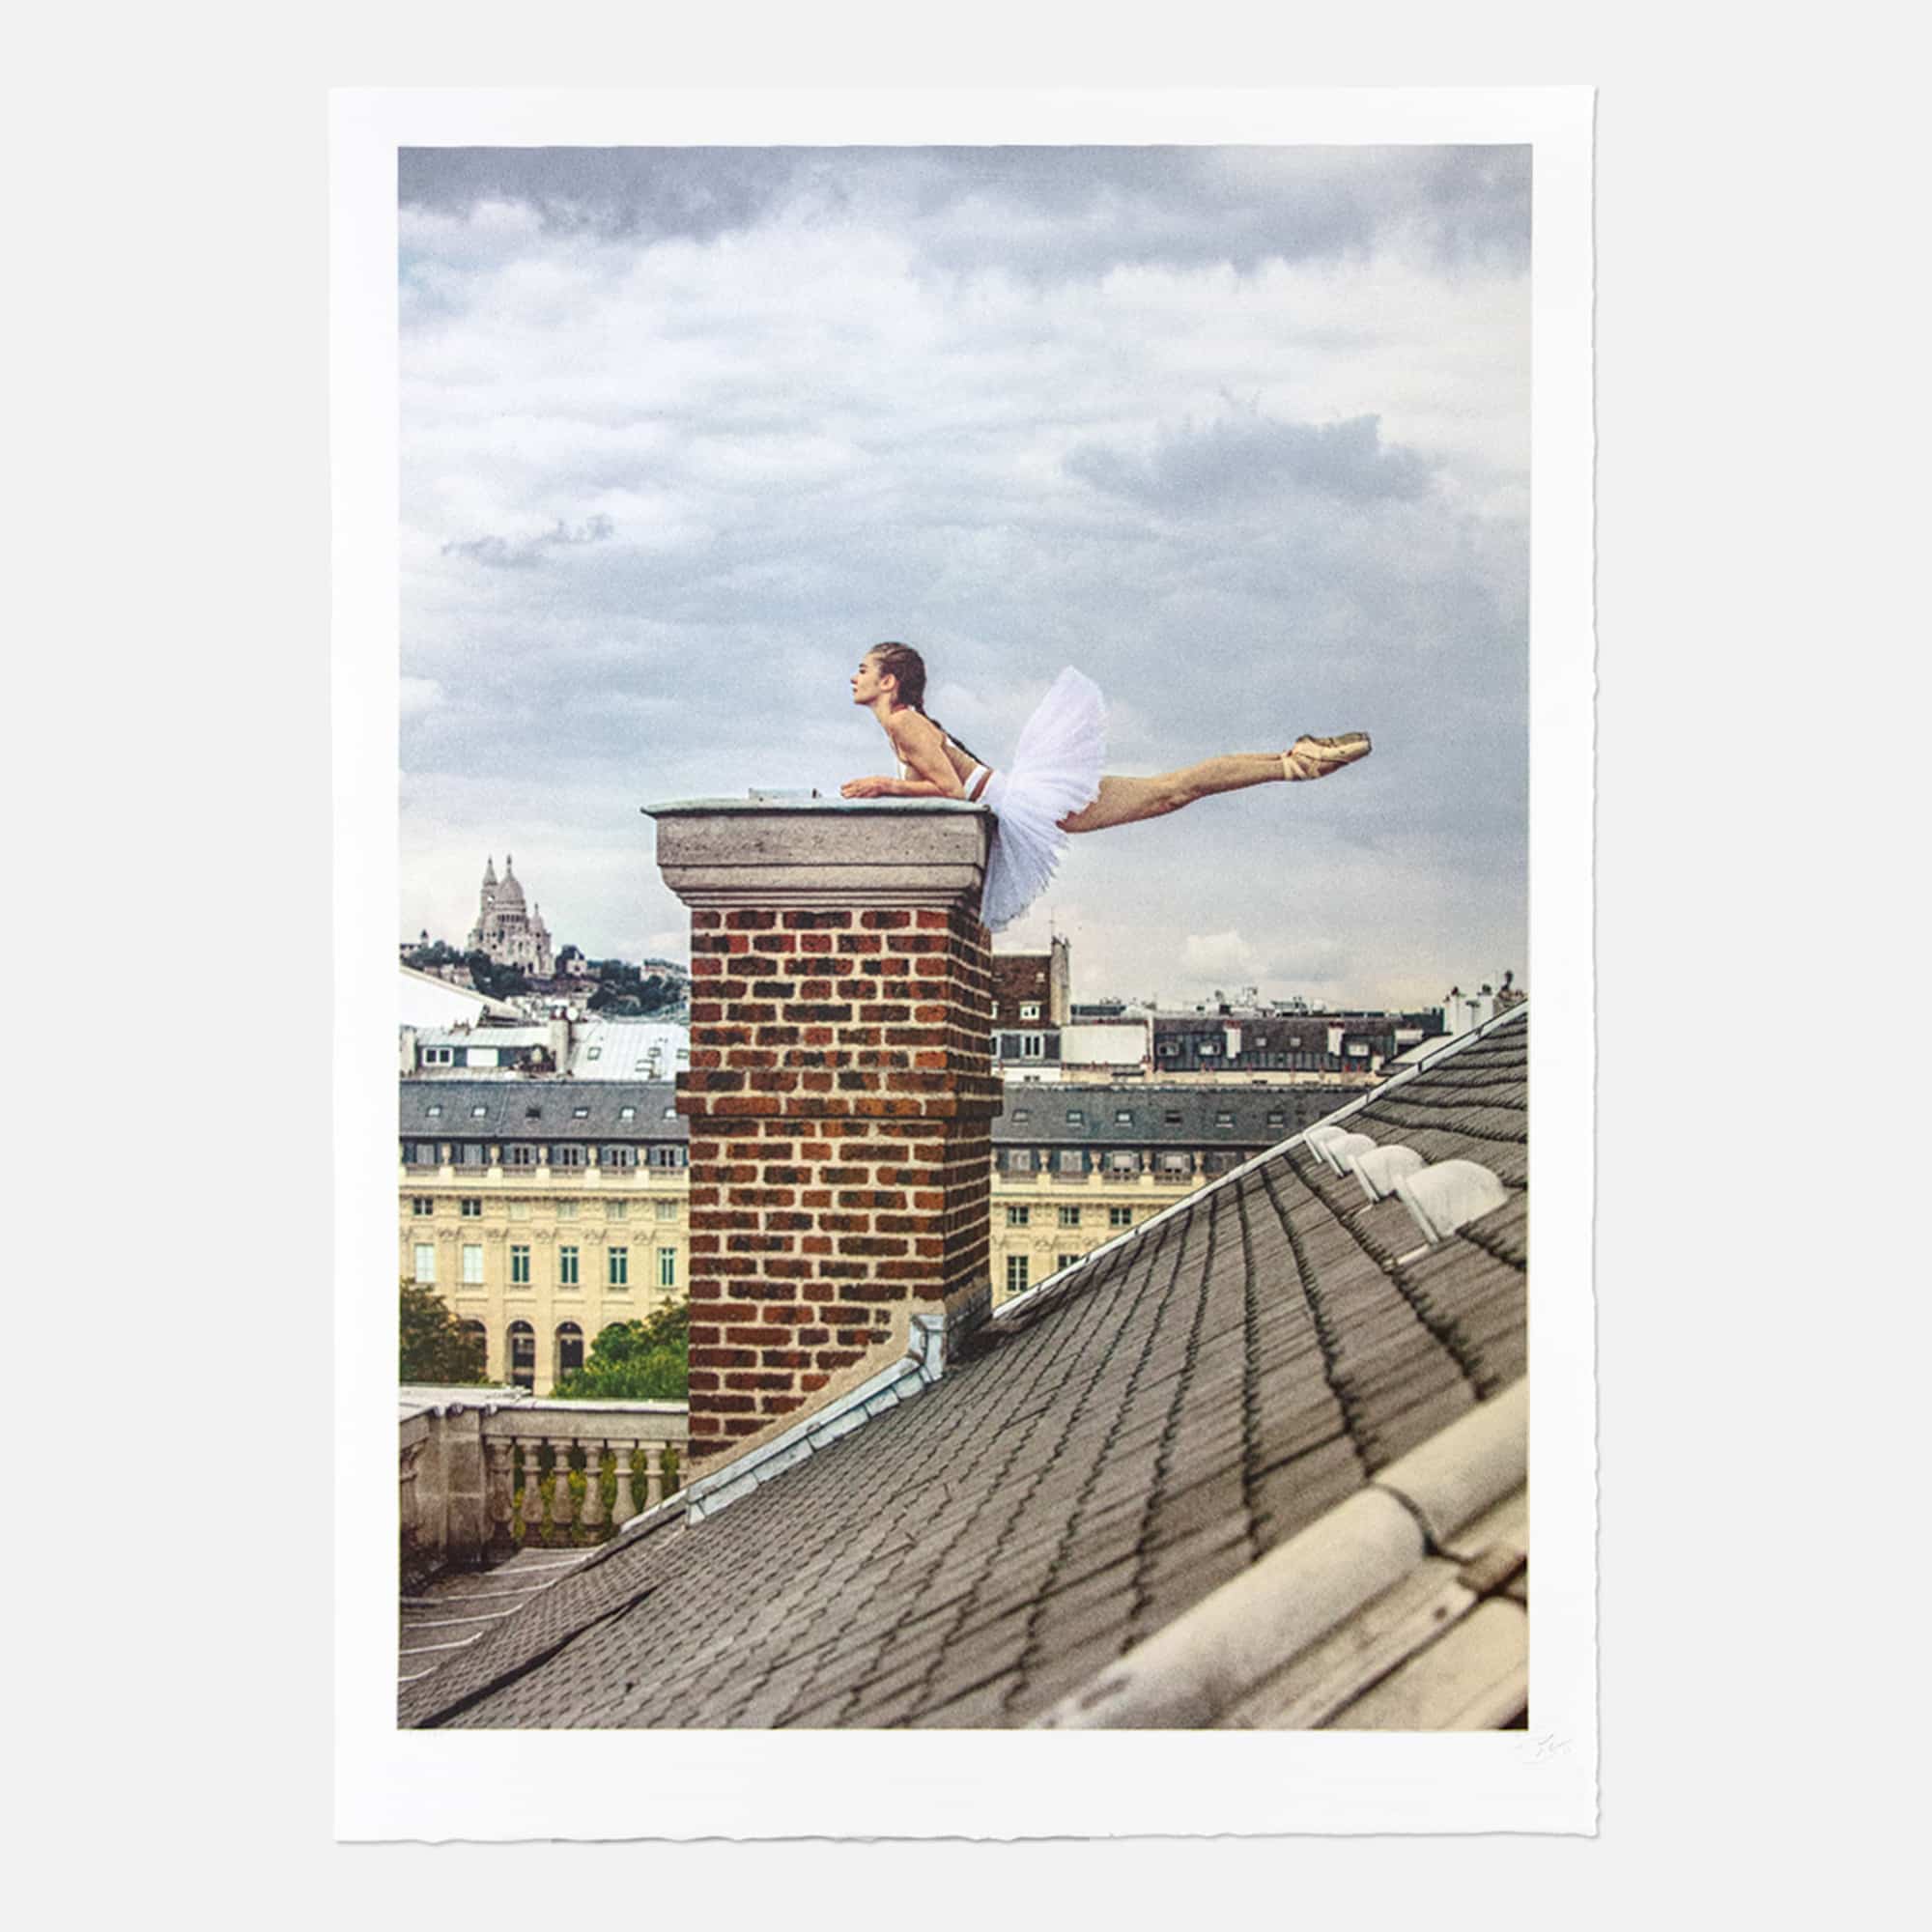 JR - Ballet, Palais Royal, Paris, France, 2020 - 2022